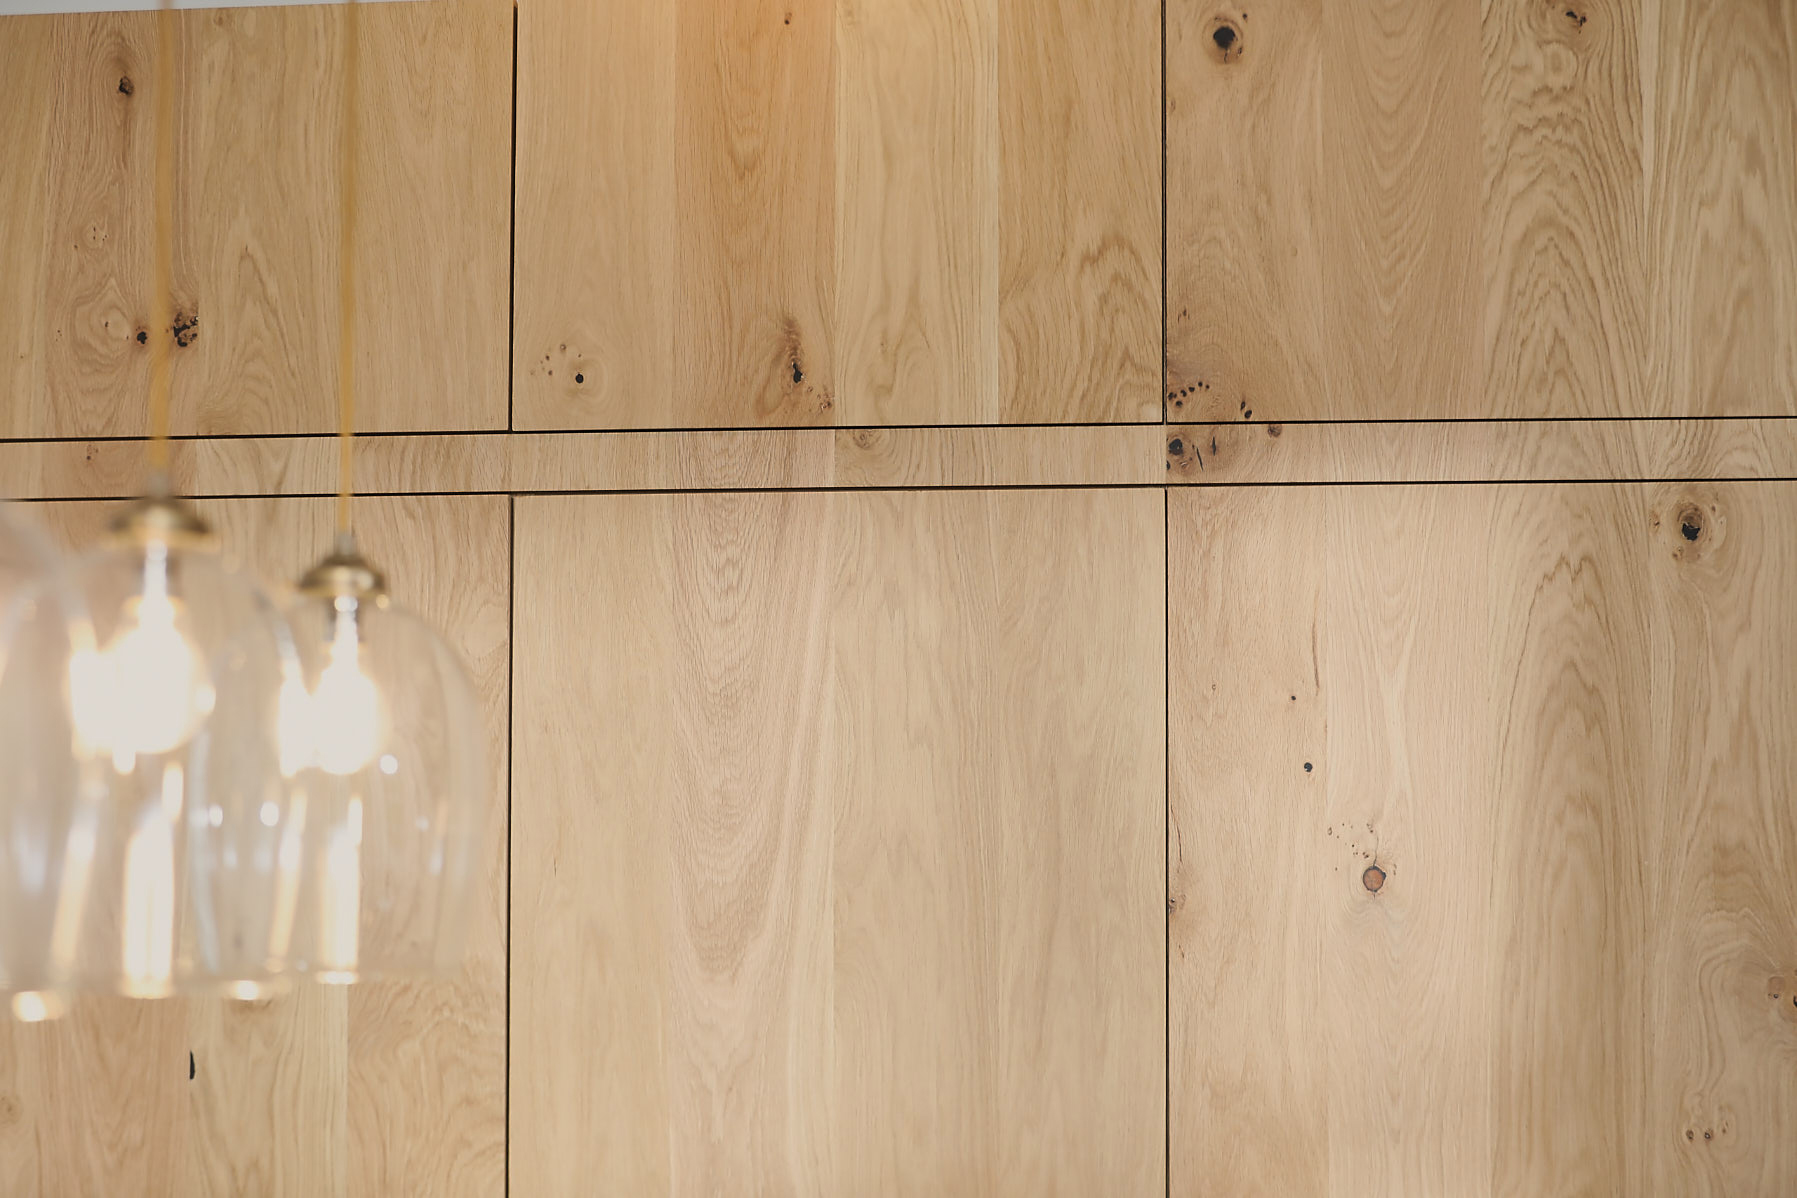 Tall oak cabinets with seamless grain running across doors